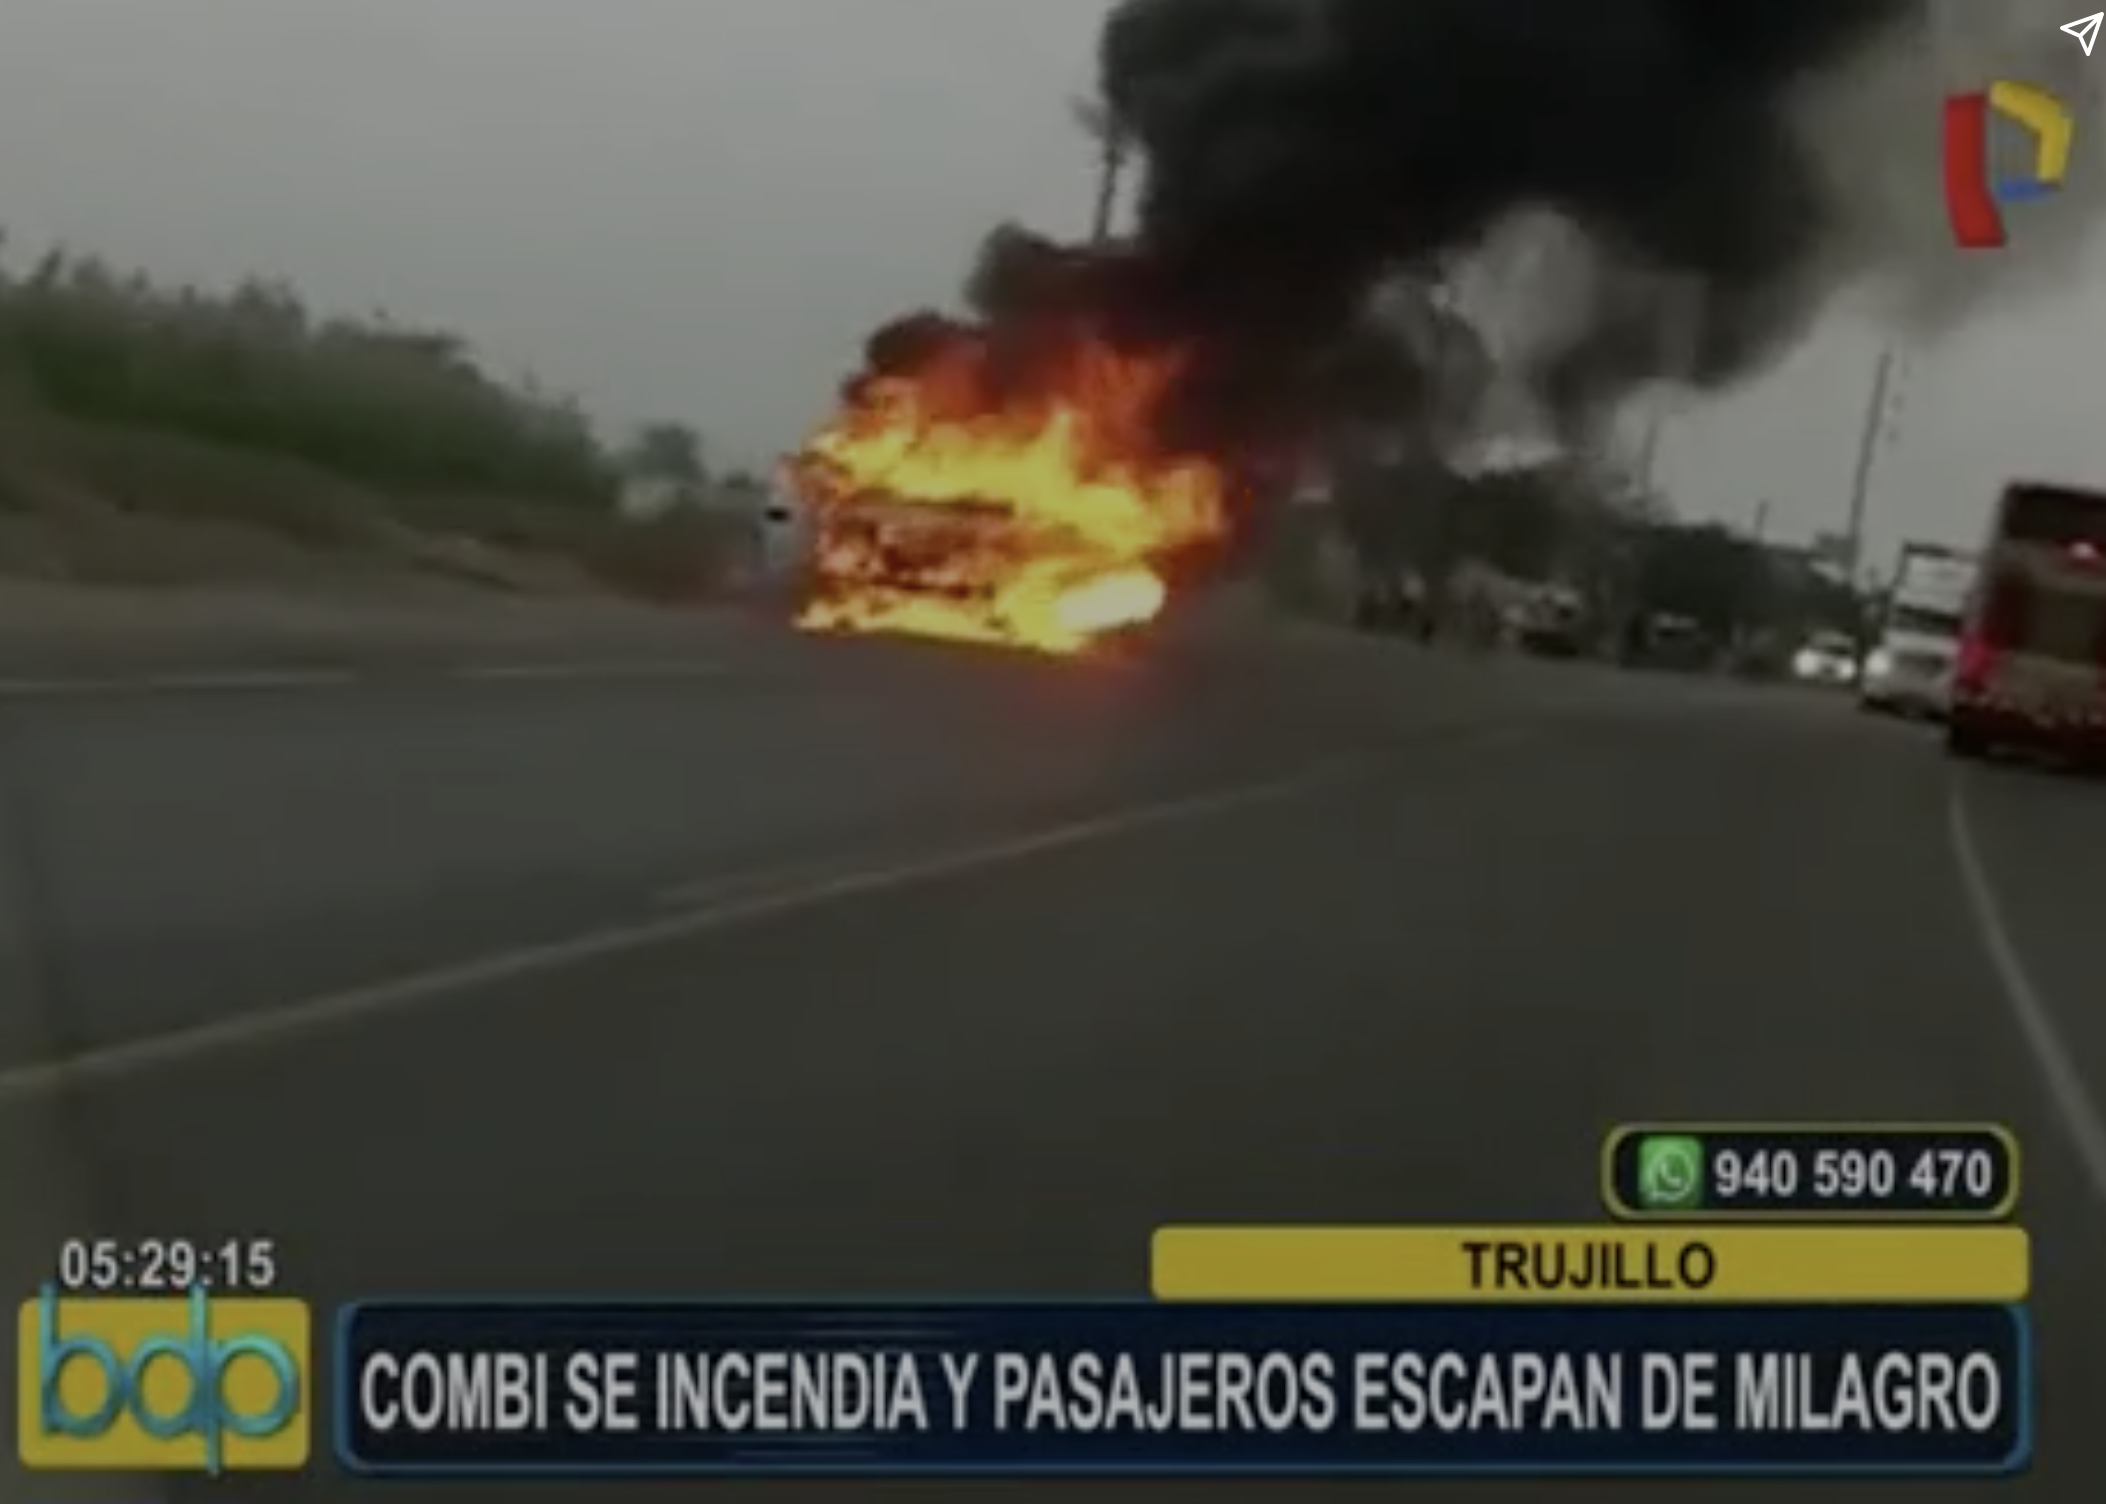 Combi se incendia en la carretera de Trujillo a Pacasmayo